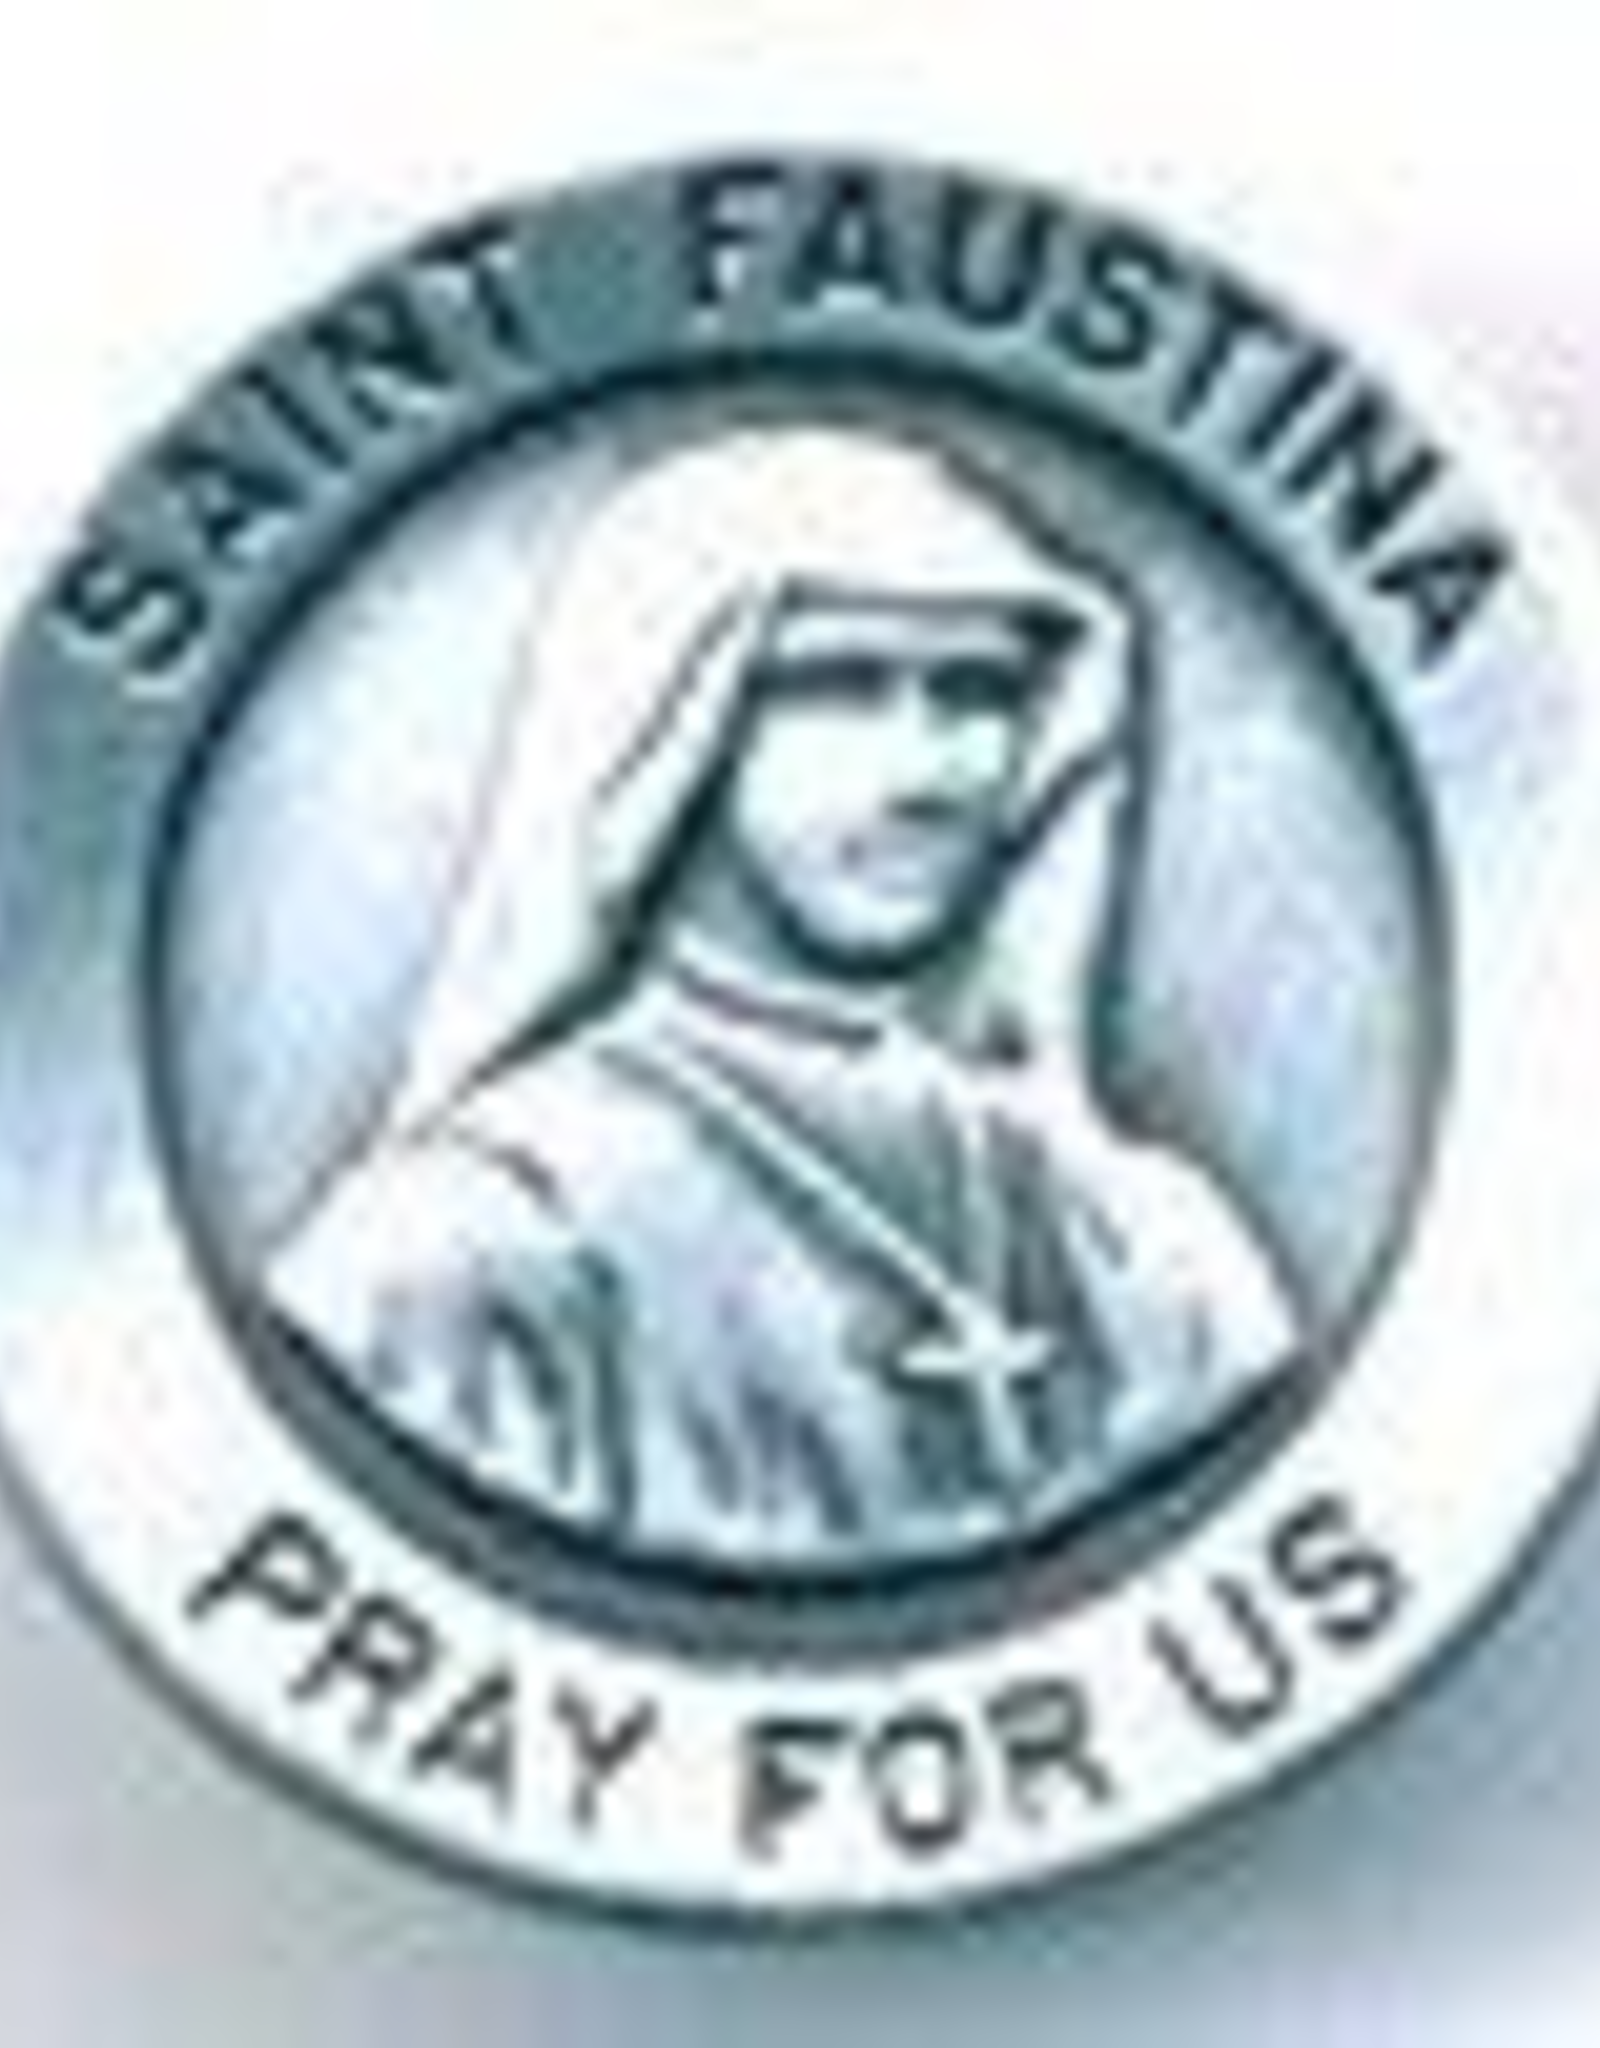 Illumigifts St. Faustina Rosary Box